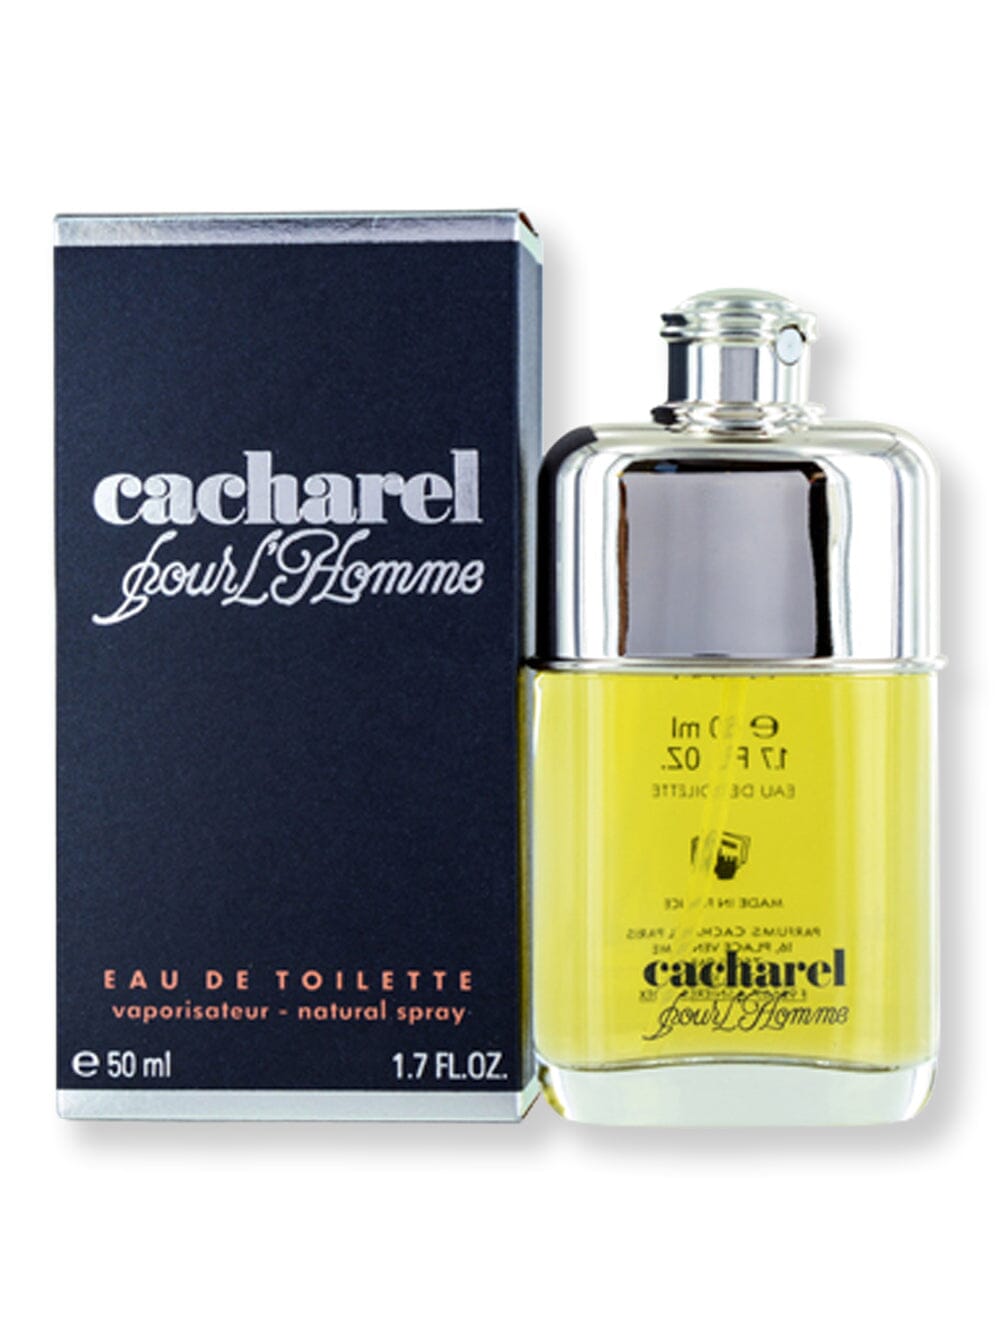 Cacharel Cacharel Pour Homme EDT Spray 1.7 oz50 ml Perfume 